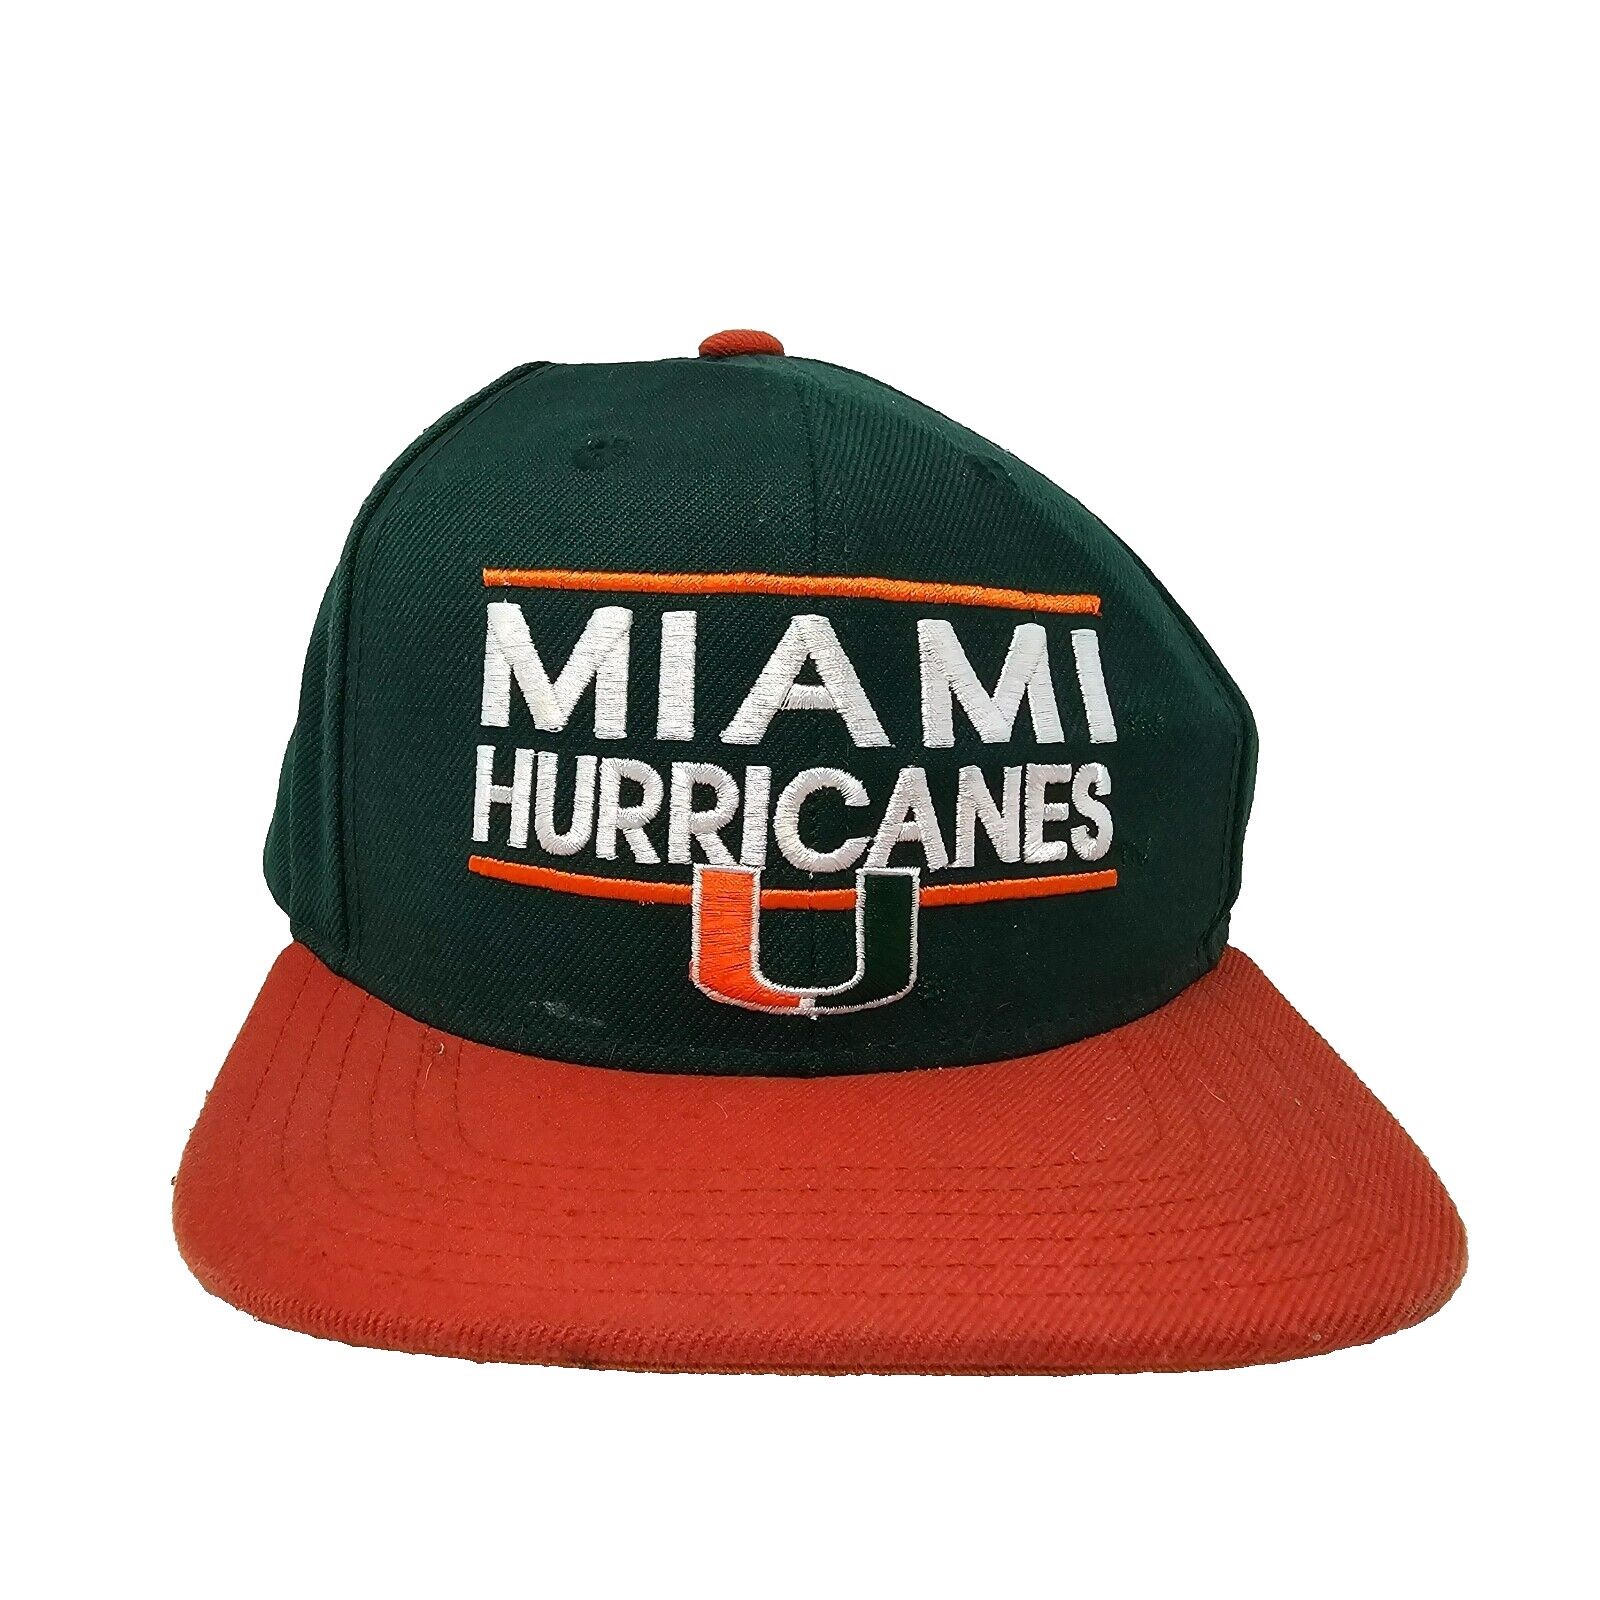 Adidas Youth Orange Green Baseball Hat Cap Adjustable UM Miami Hurricanes - $14.64